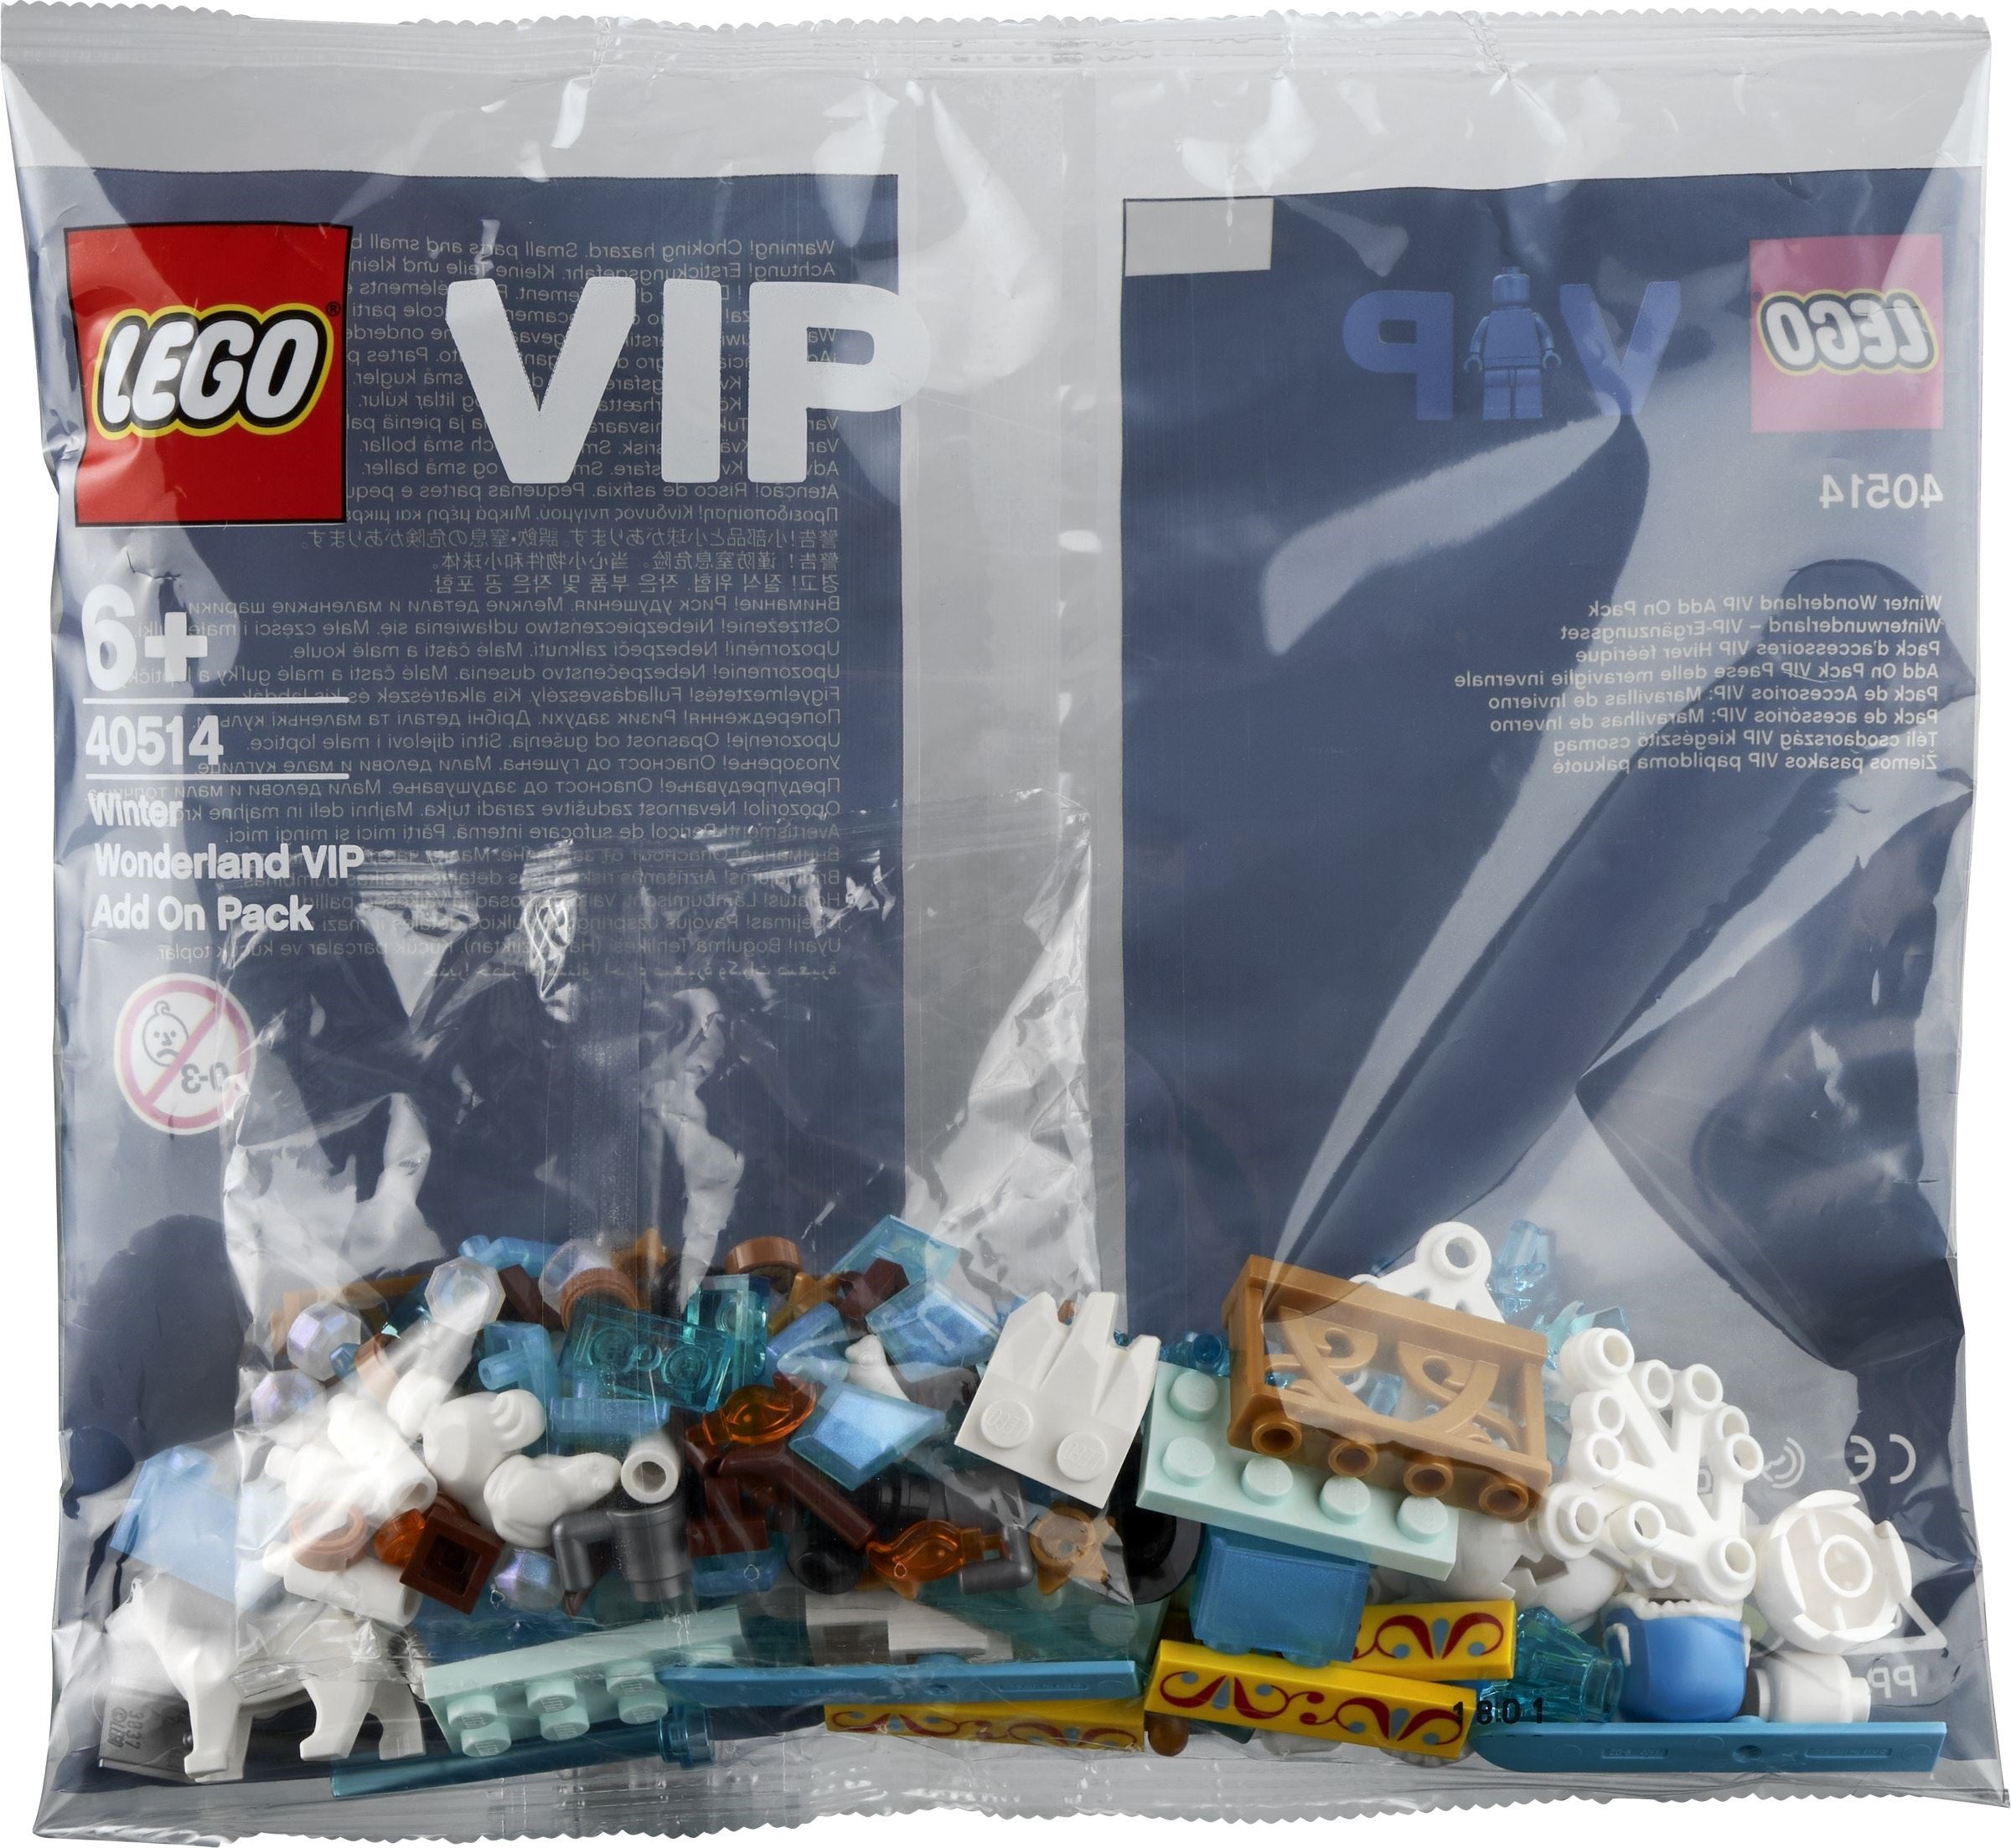 Lego 40514 - Winter Wonderland VIP Add On Pack